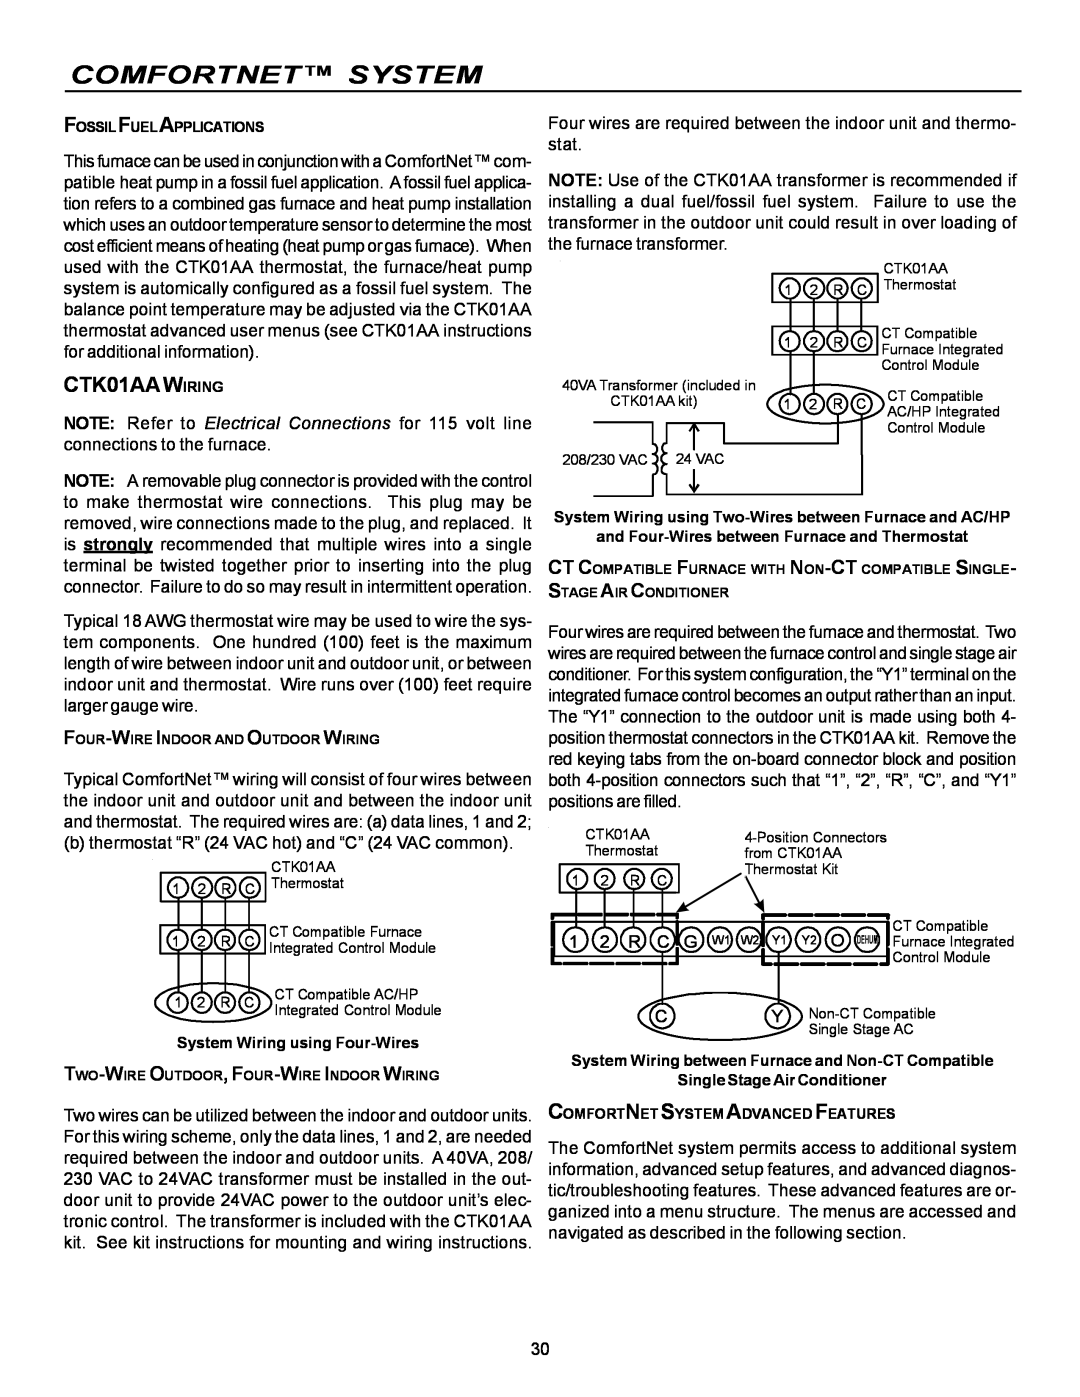 Goodman Mfg VC8 instruction manual Comfortnet System, b thermostat “R” 24 VAC hot and “C” 24 VAC common 